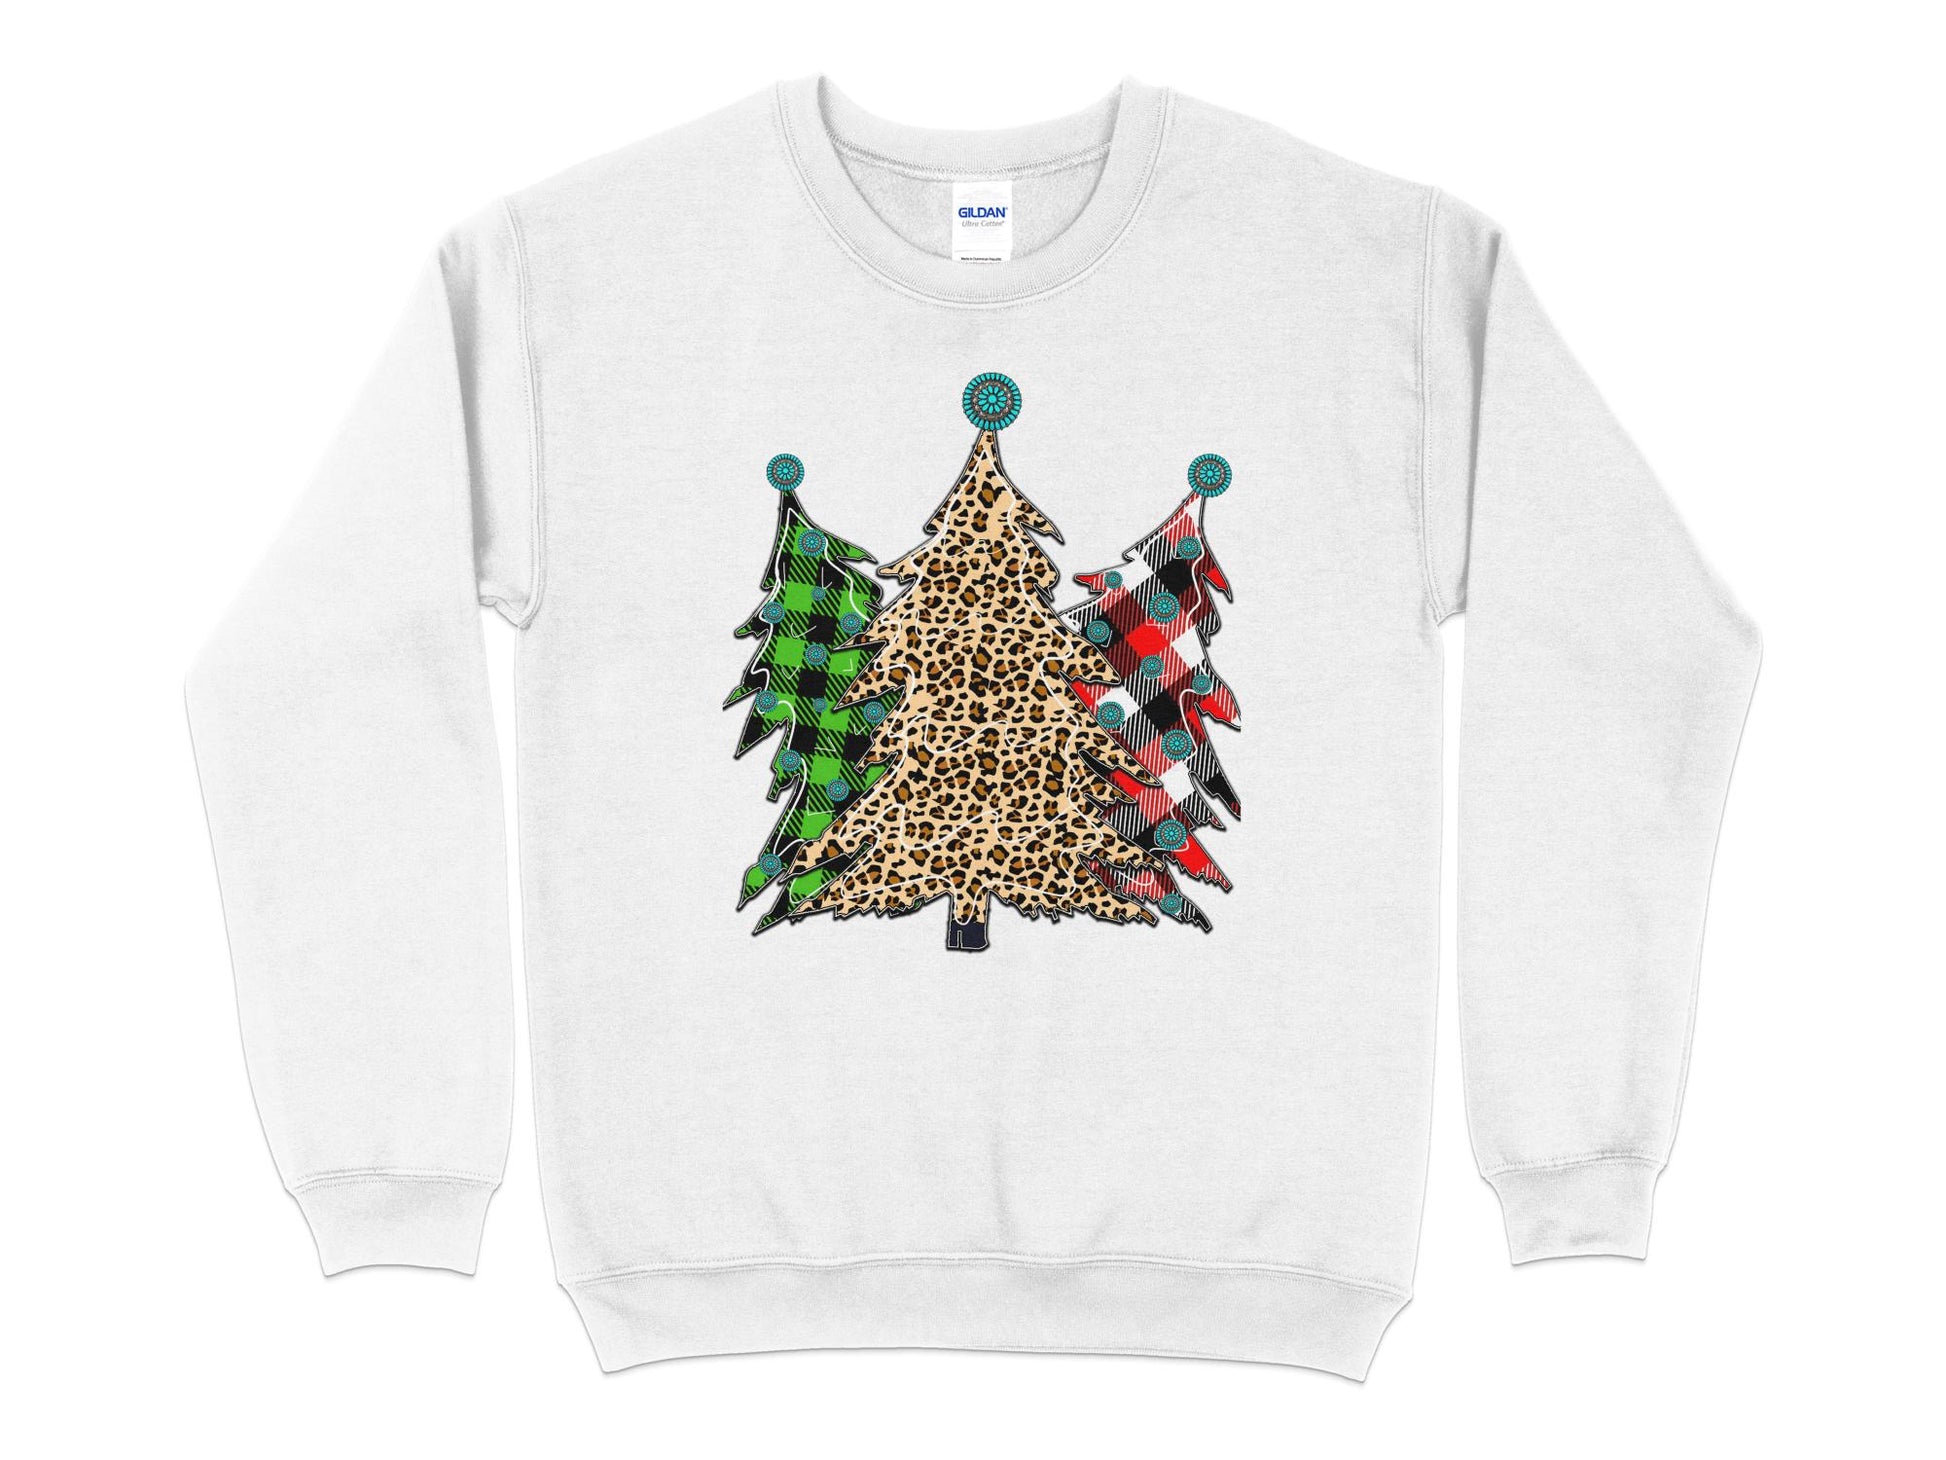 Christmas Tree Leopard Plaid Sweatshirt, Womens Cute Christmas Sweater, Christmas Holiday Party Pullover, Leopard Print Crewneck Knit - Mardonyx Sweatshirt S / White